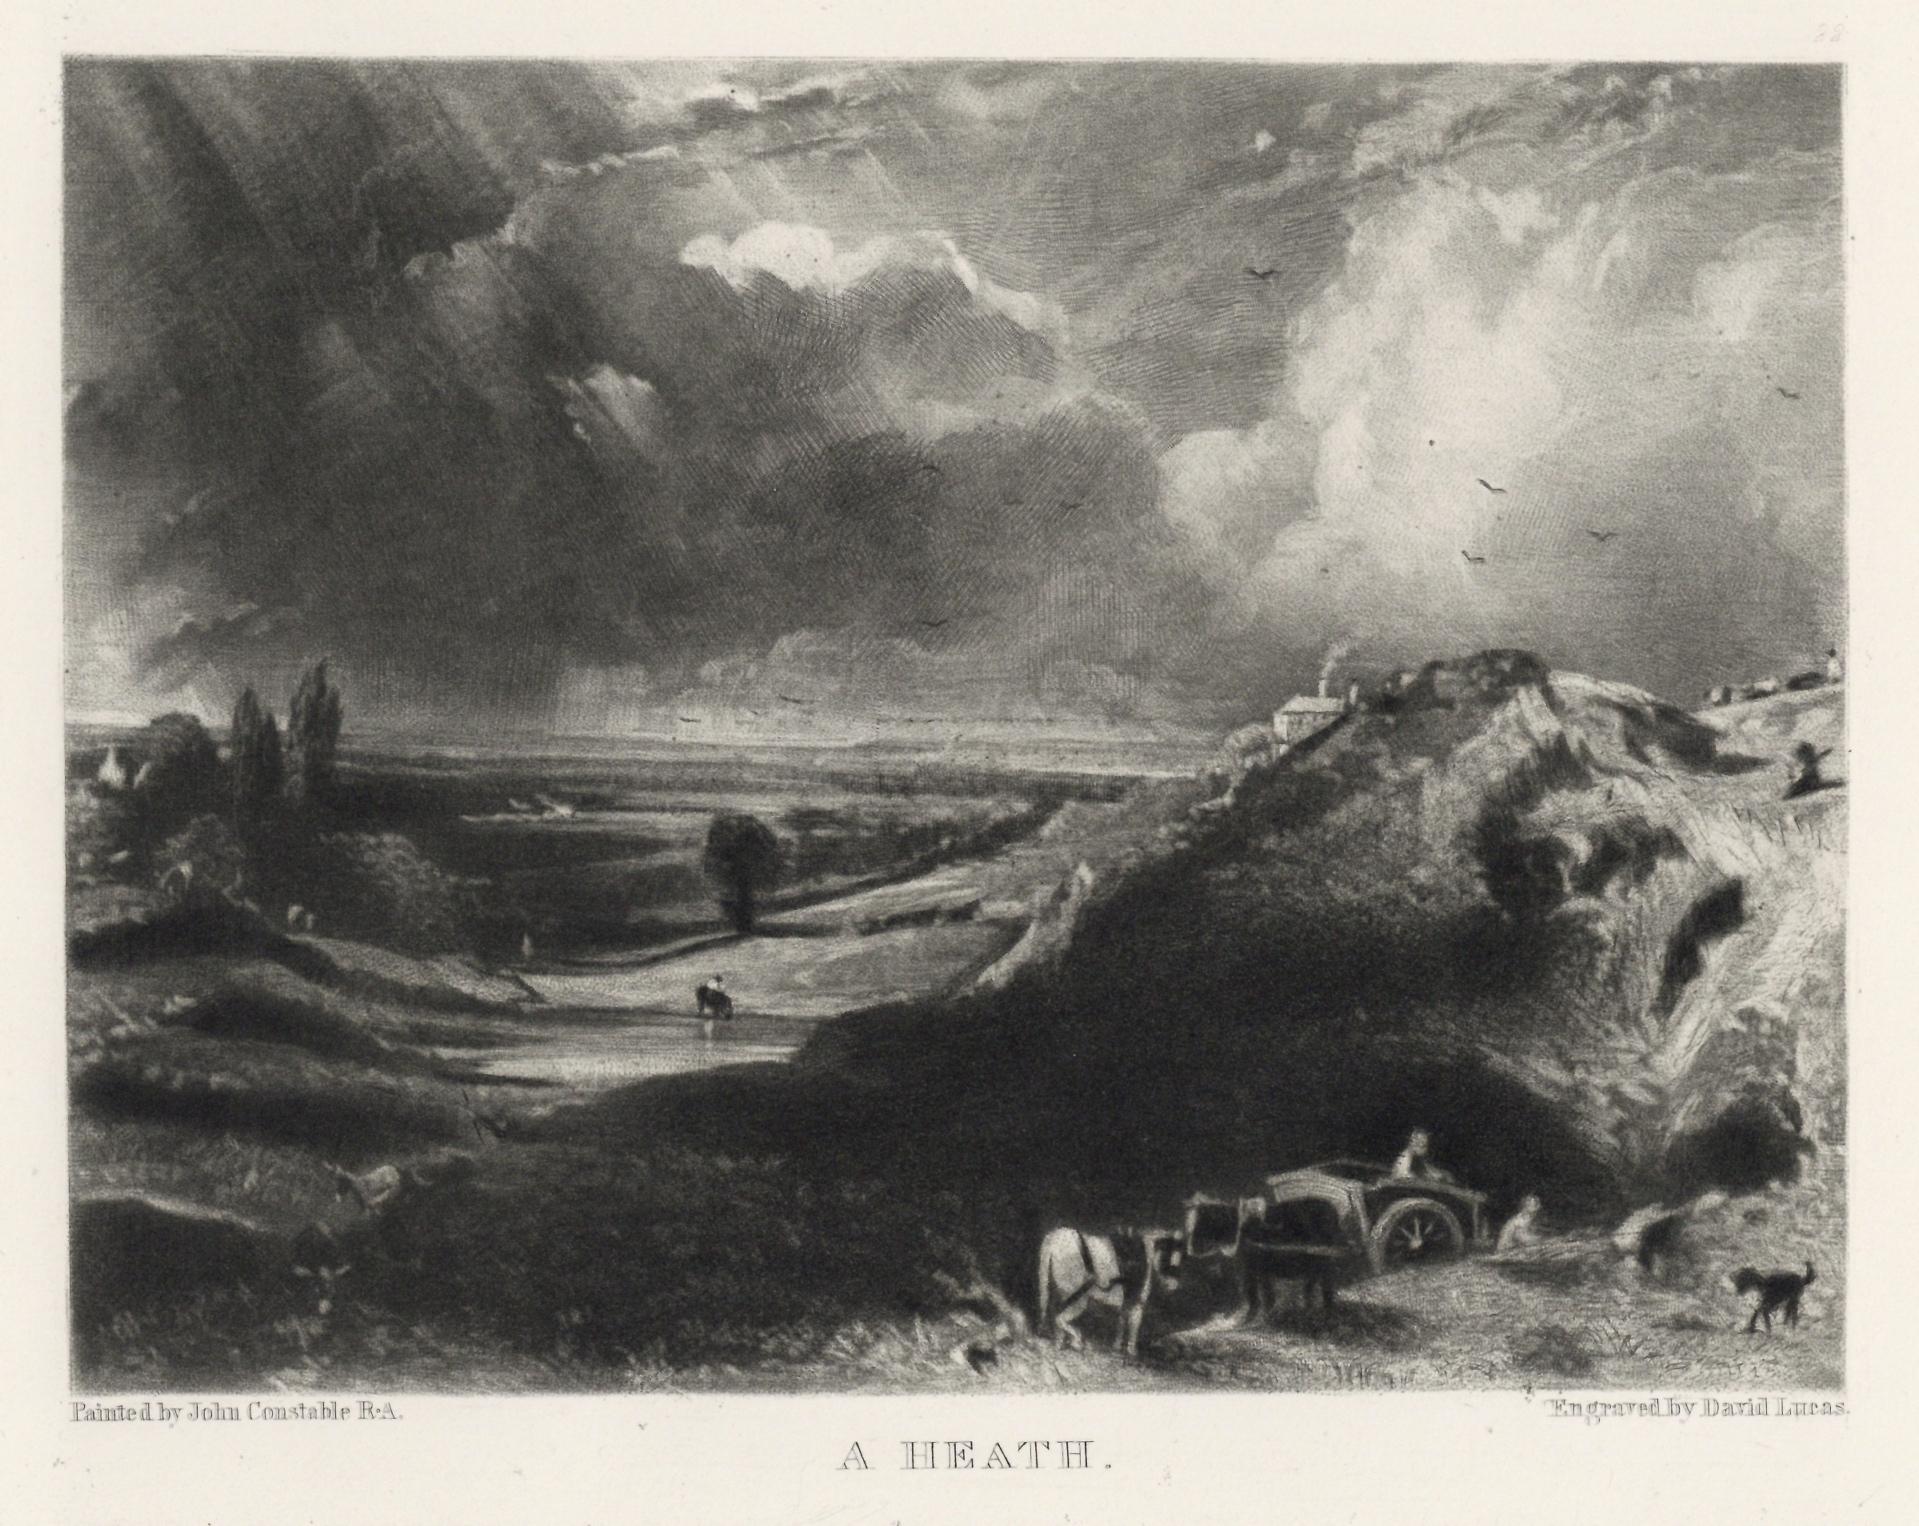 David Lucas Landscape Print - (after) John Constable mezzotint "A Heath"